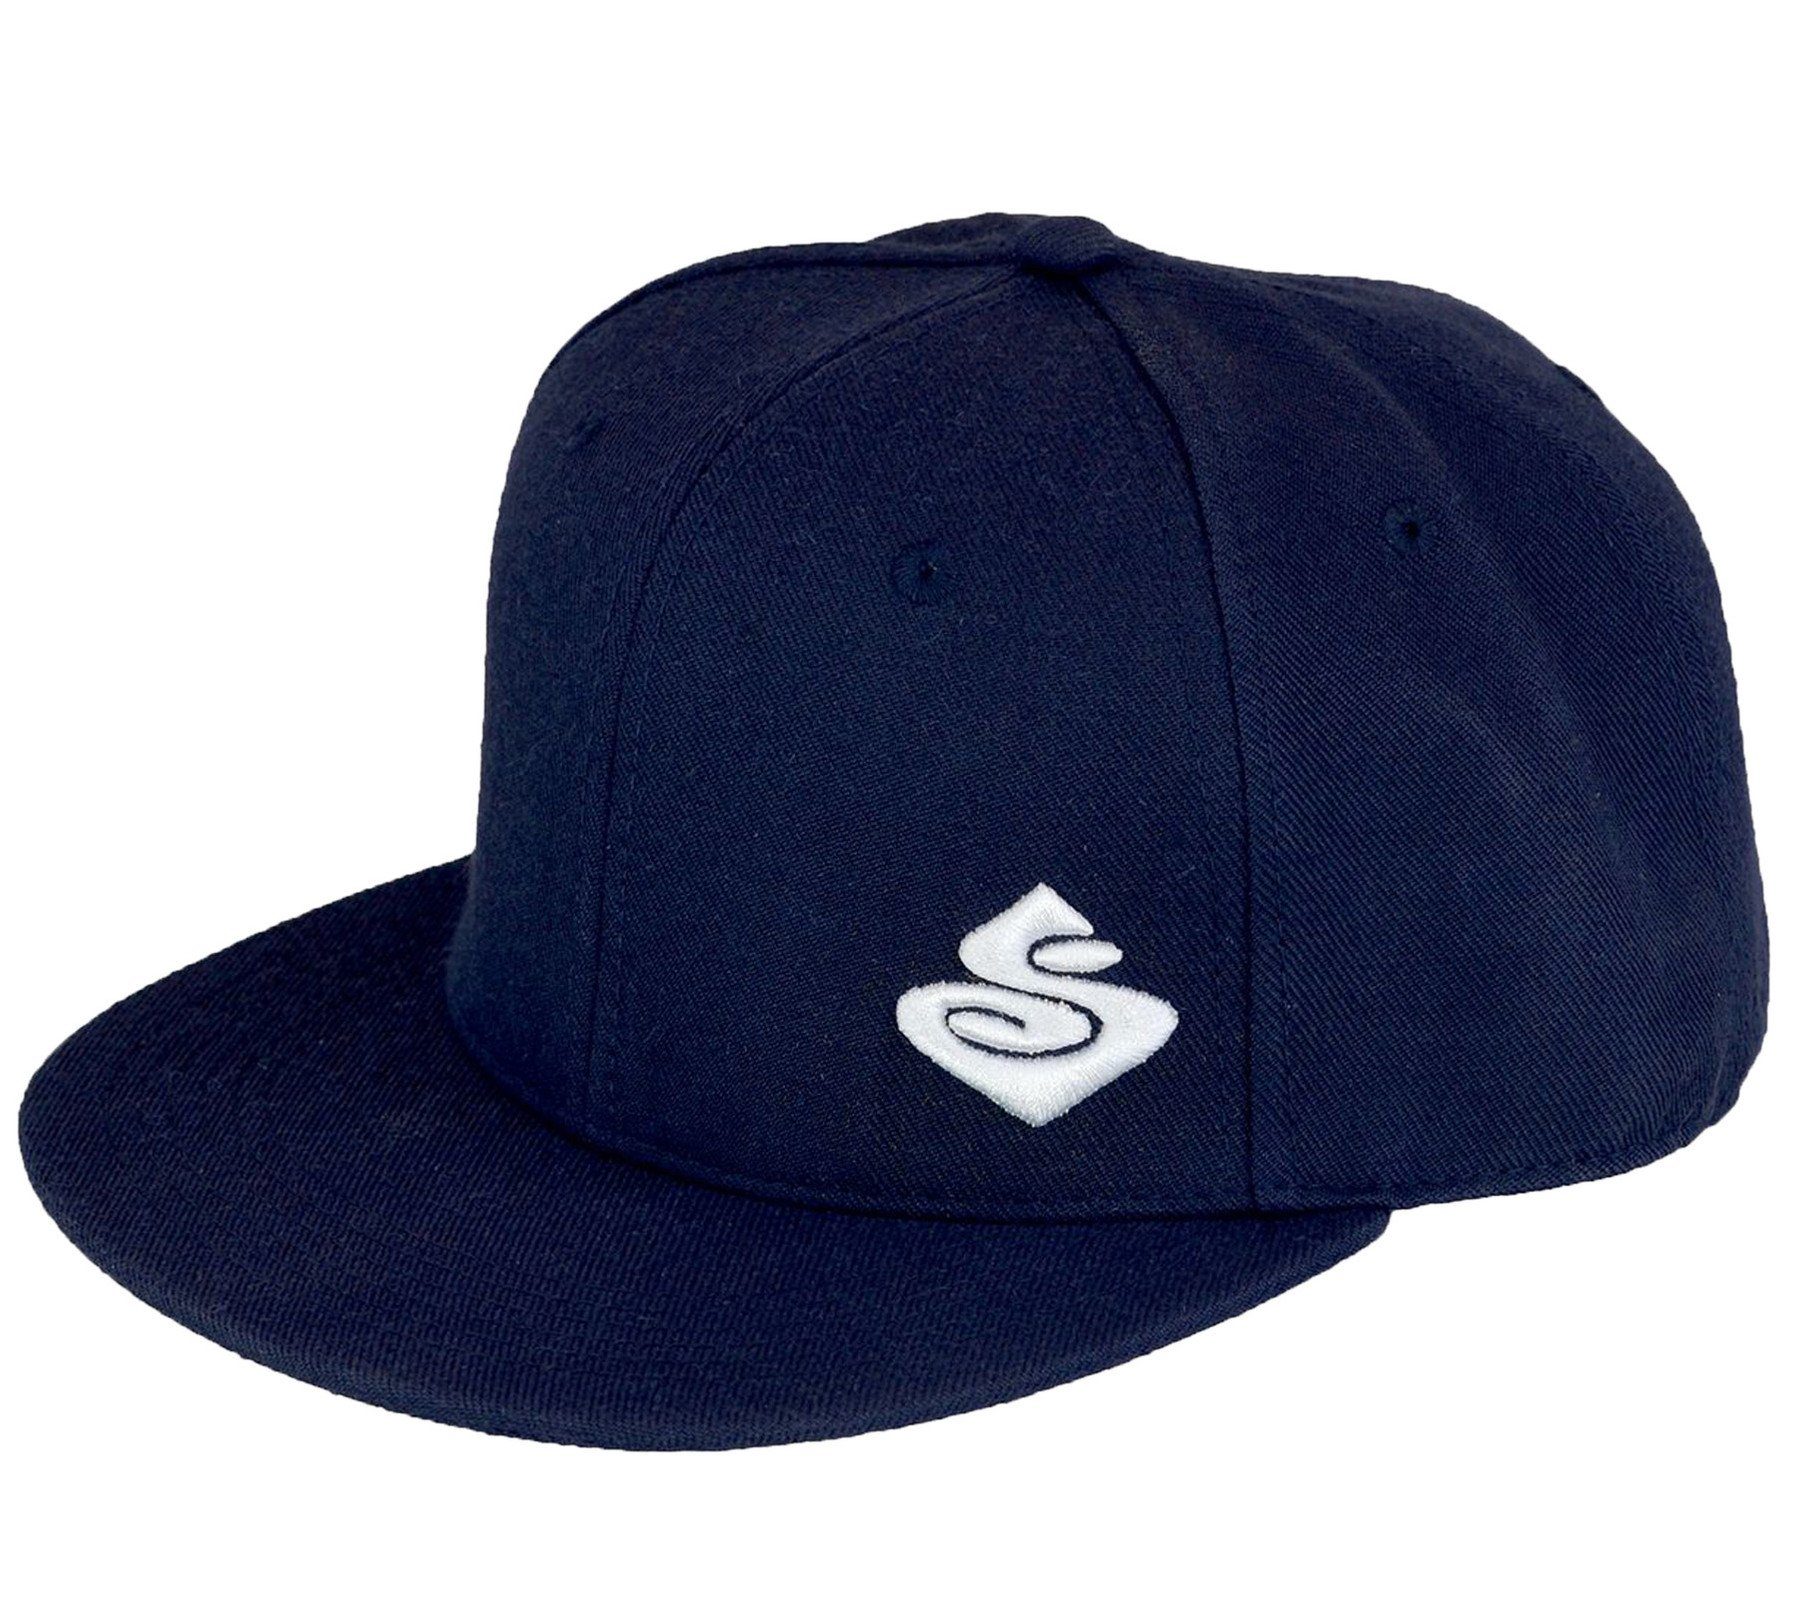 Protection flacher Cap Blau Base-Kappe Fitted Baseball Krempe Sweet Cap mit Freizeit-Cap protection sweet stylische Corporate